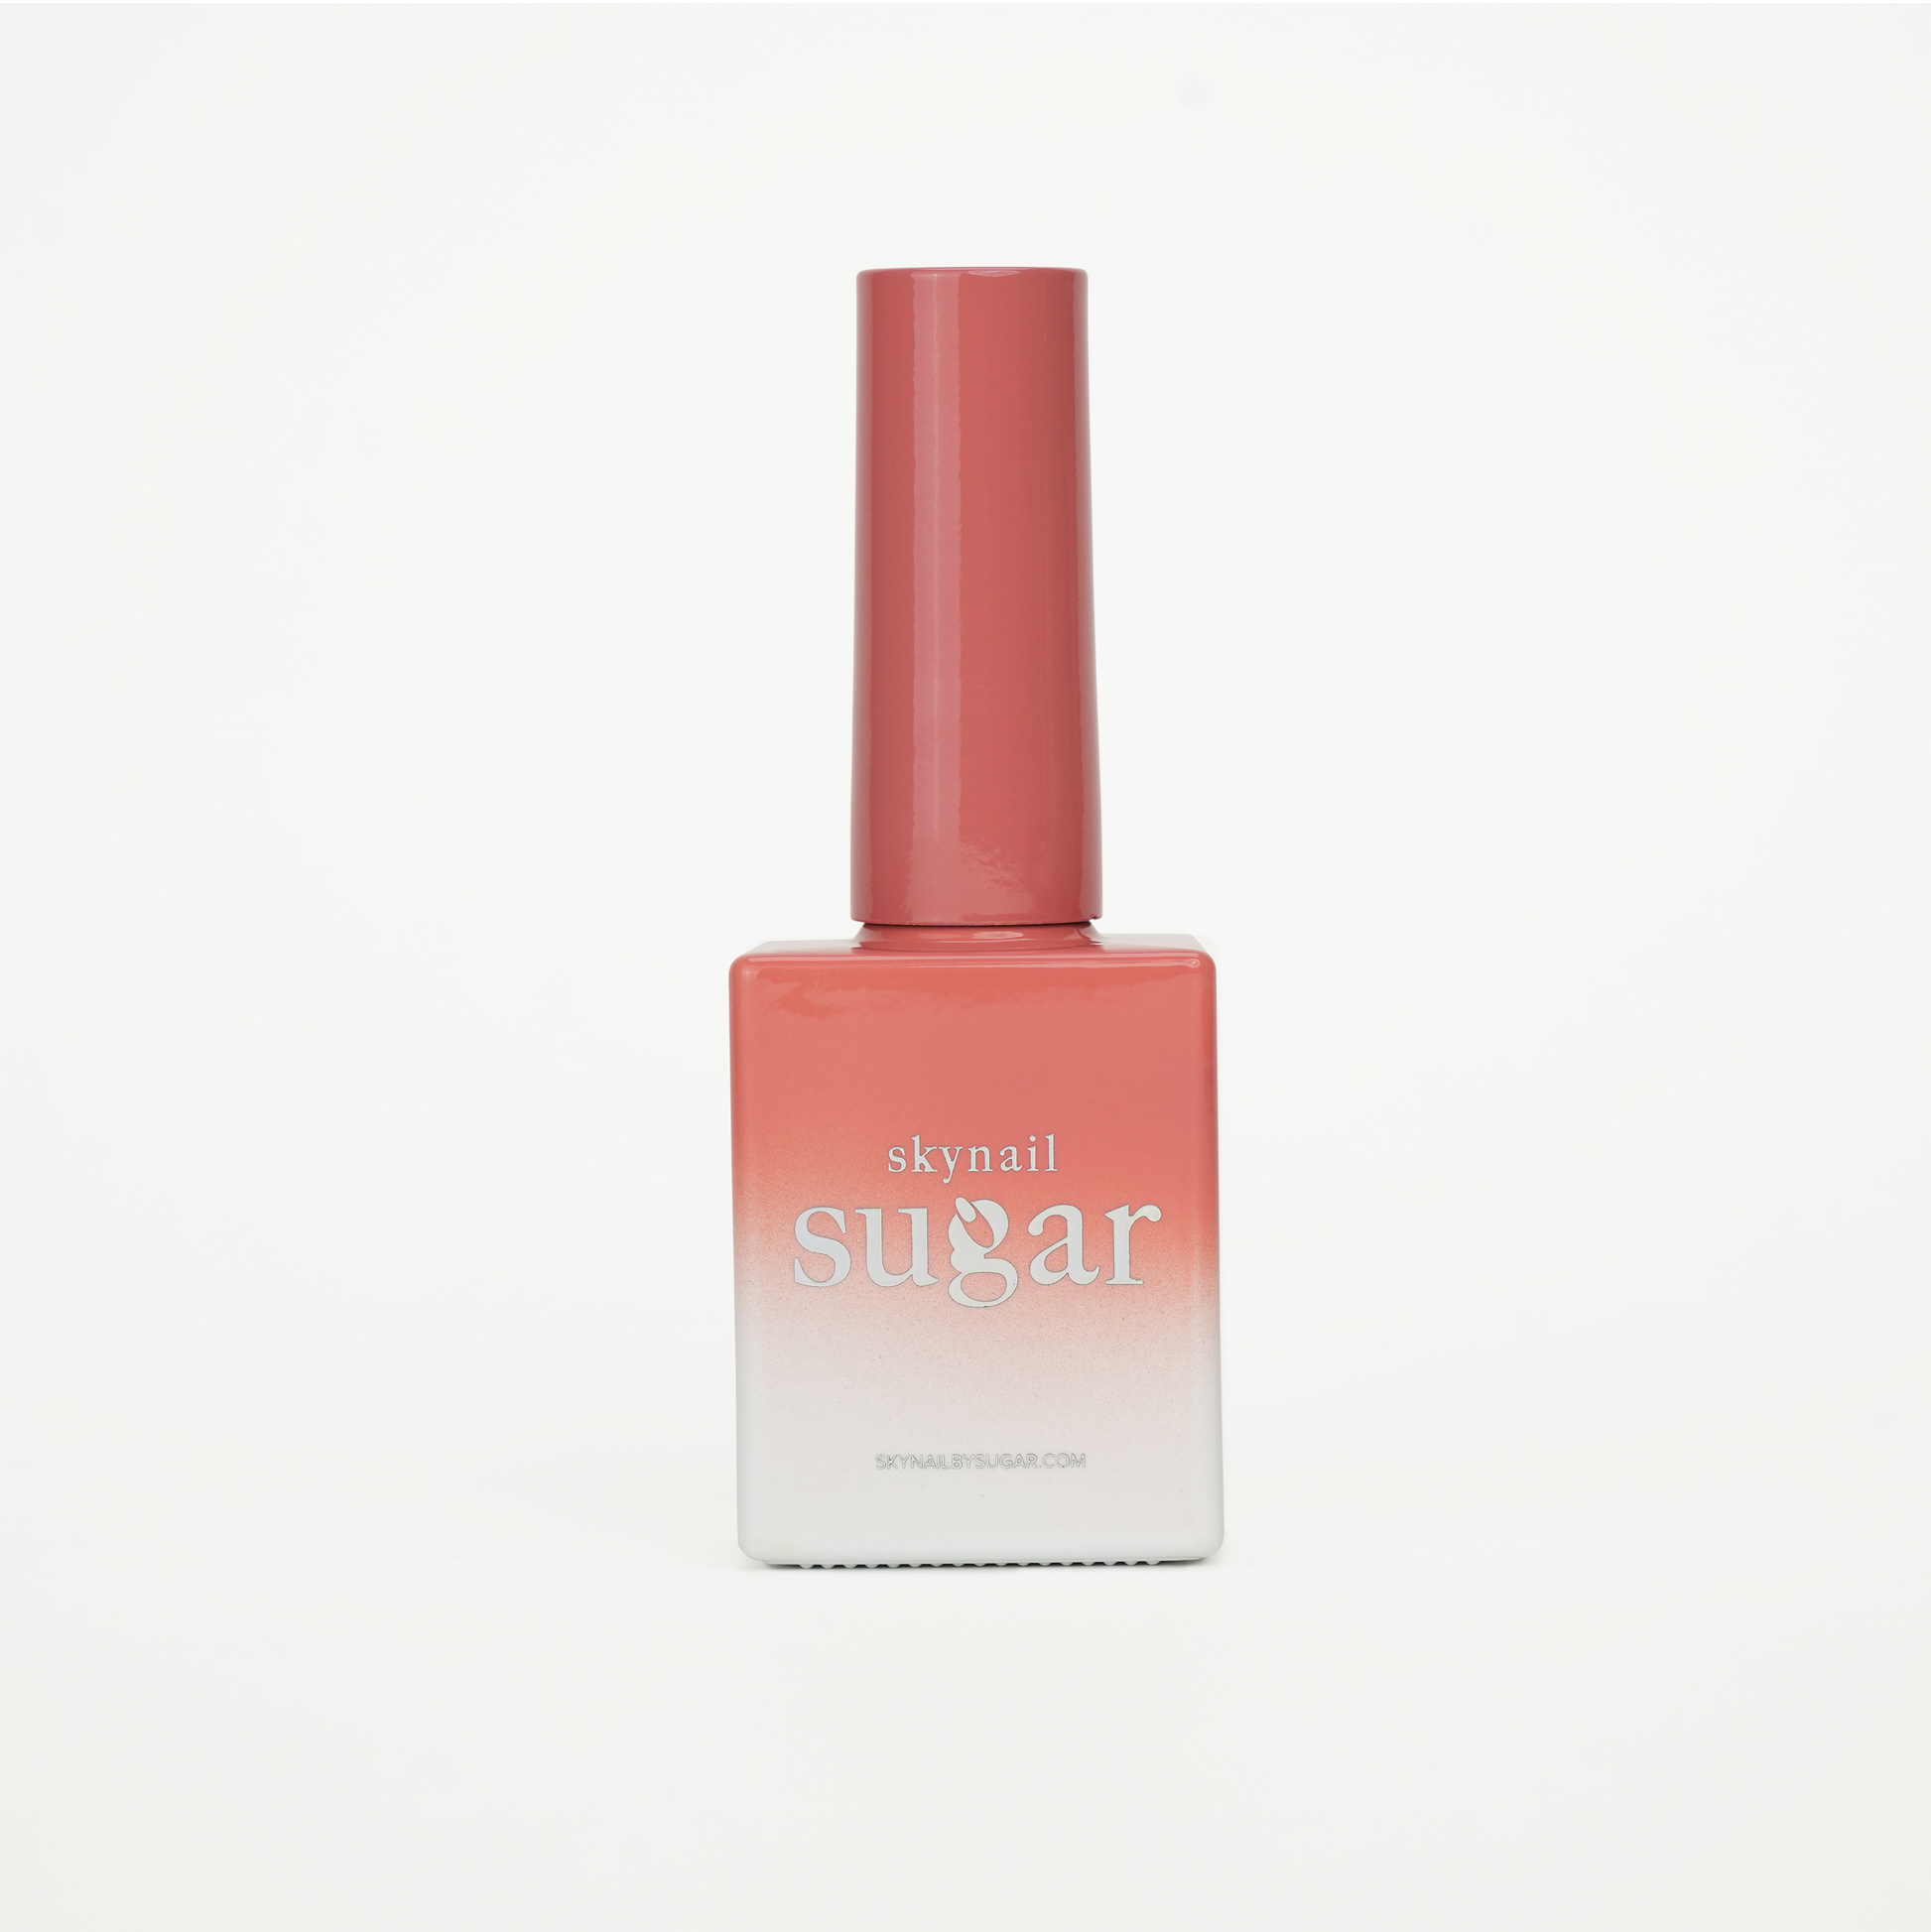 Bottle of syrup sn018 gel nail polish from Skynailbysugar